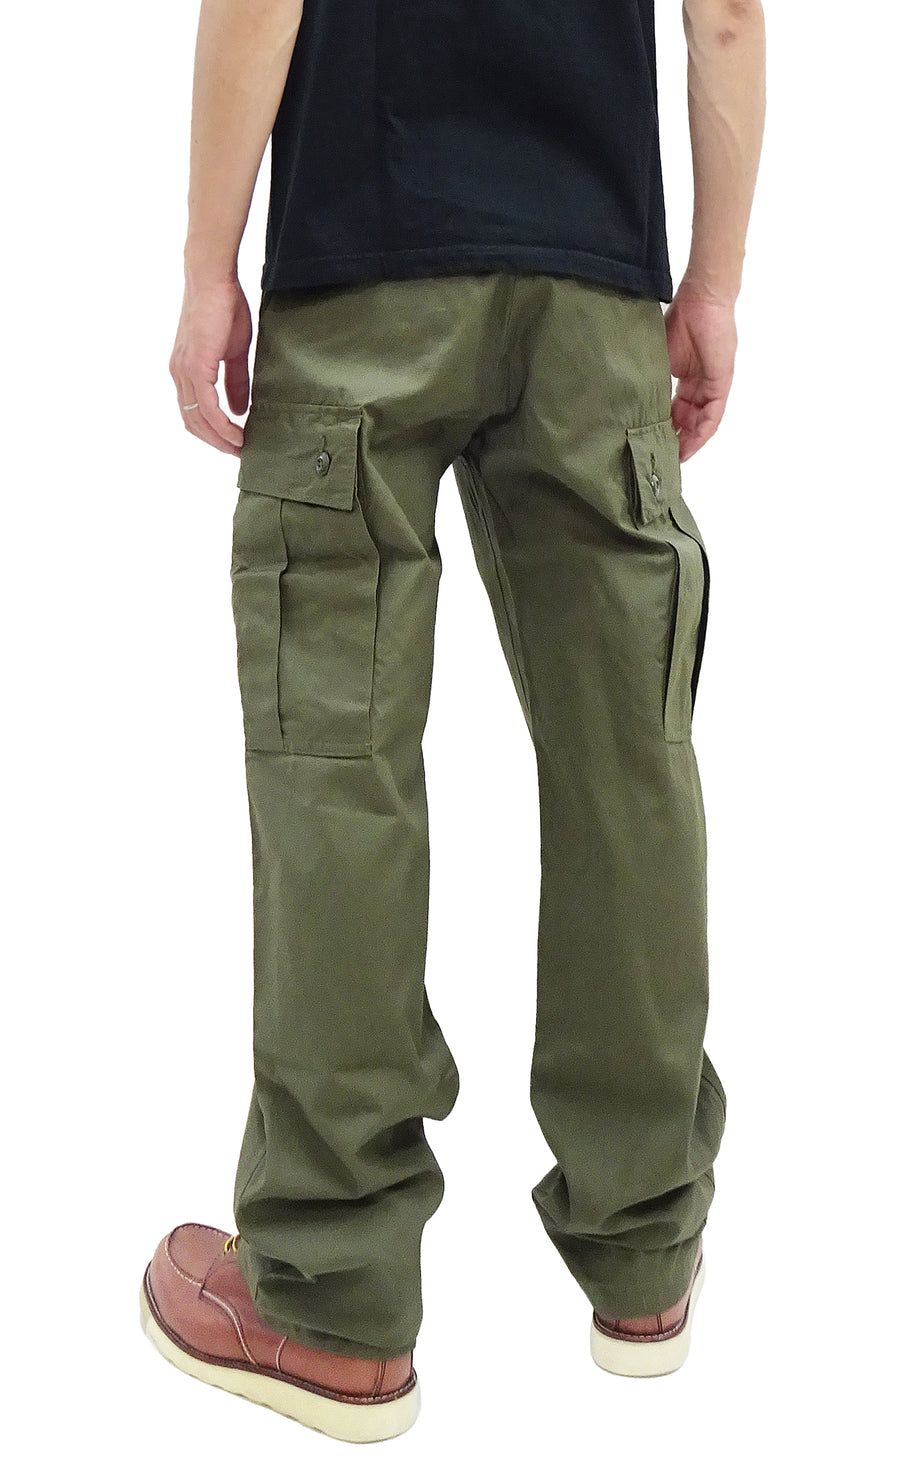 Buzz Rickson Cargo Pants Men's Reproduction of US Army Vietnam 